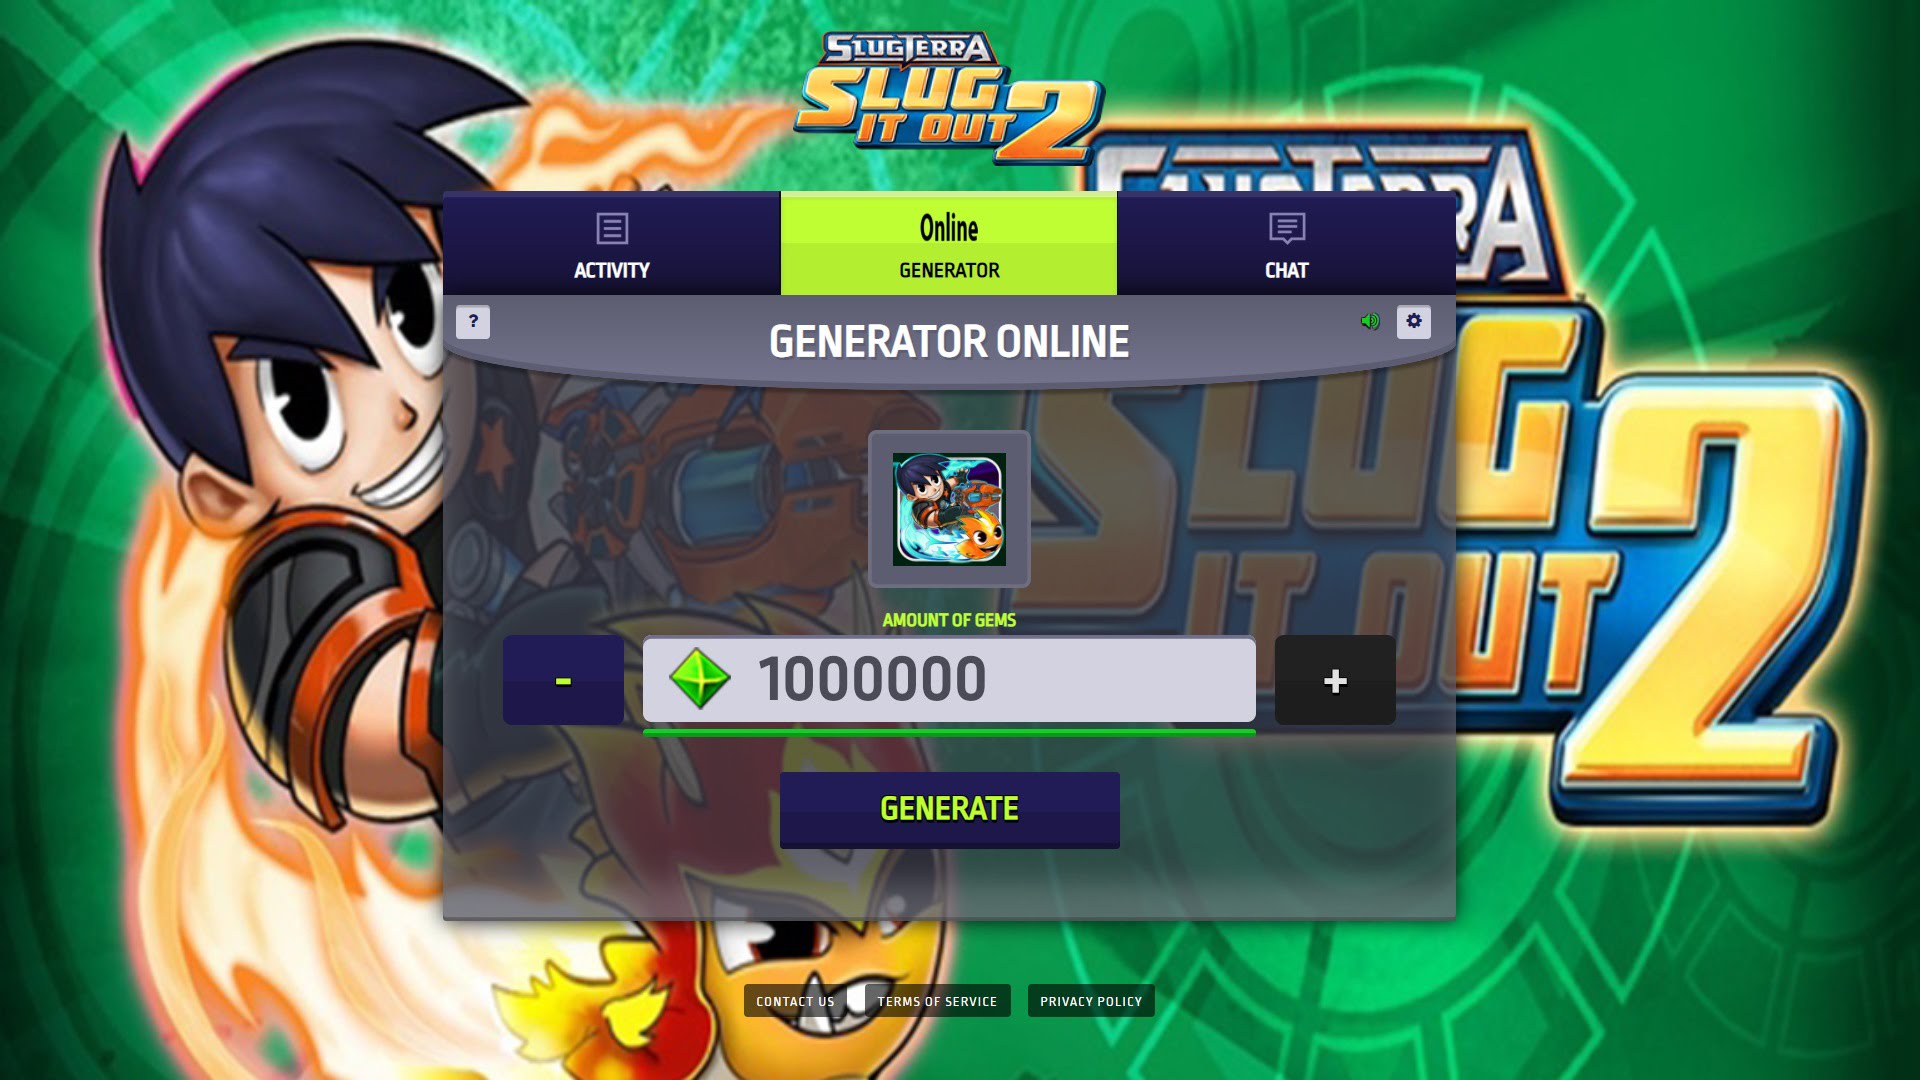 slugterra slug it out 2 game play online